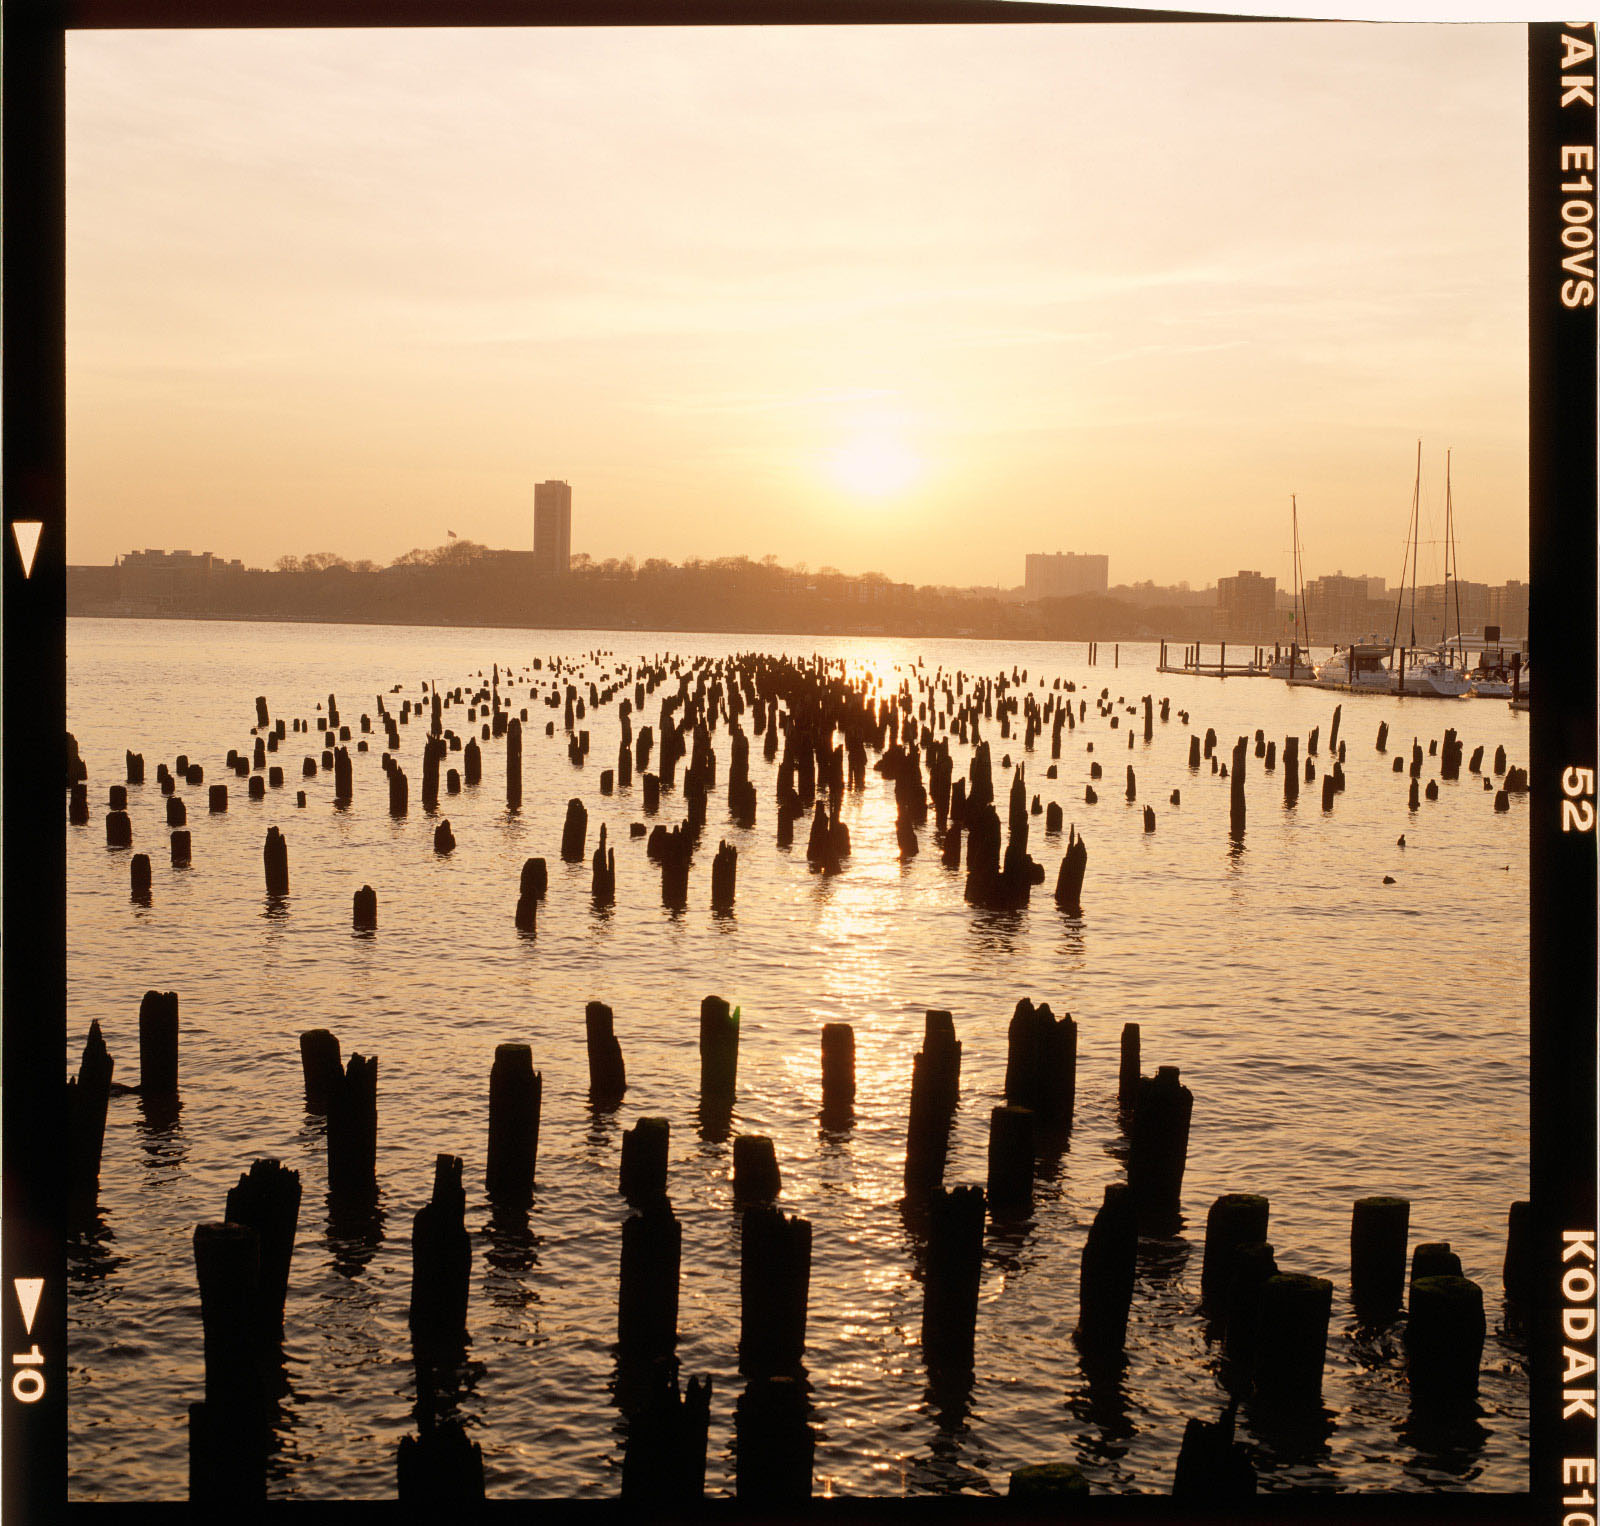 Pier-pilings-on-Hudson-River-at-Sunset